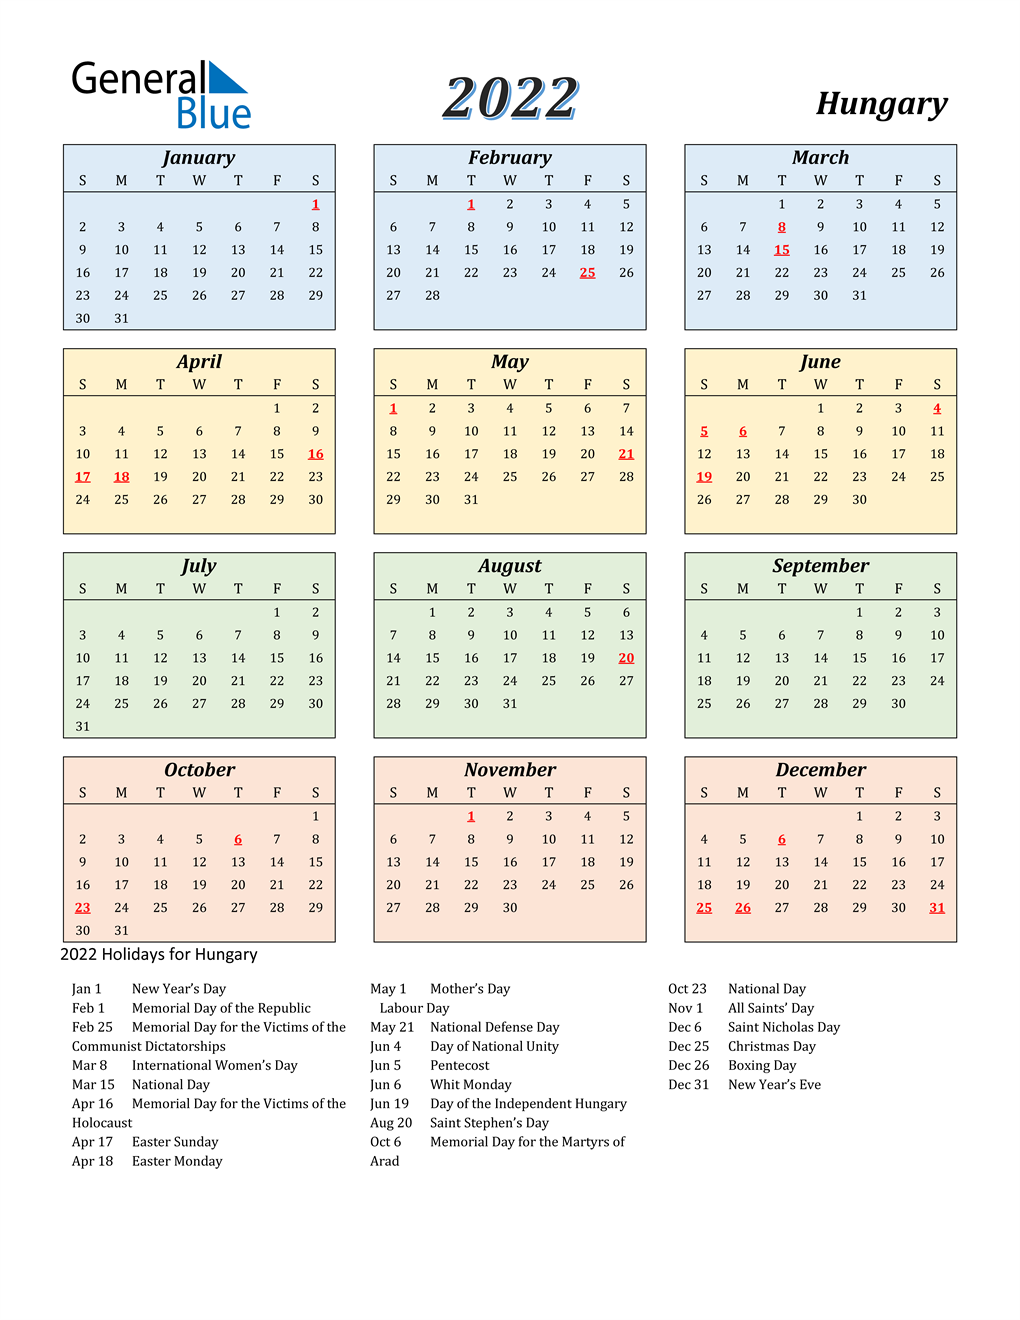 Holiday Calendar For 2022 2022 Hungary Calendar With Holidays